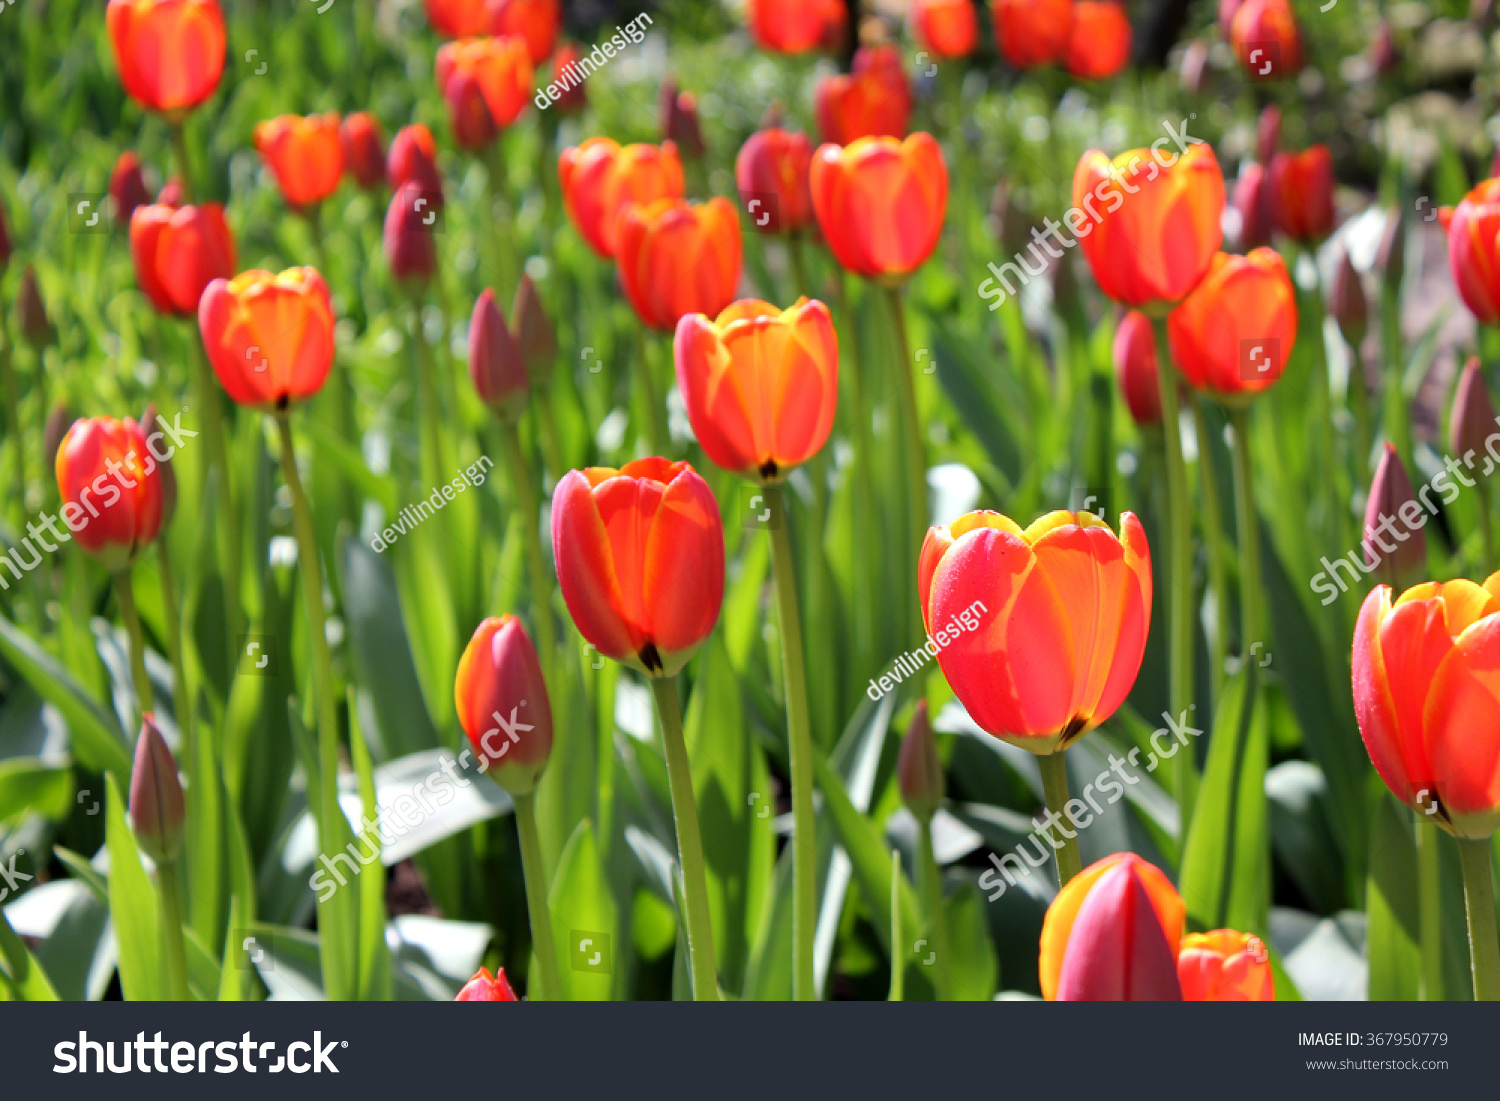 Tulip Background #367950779